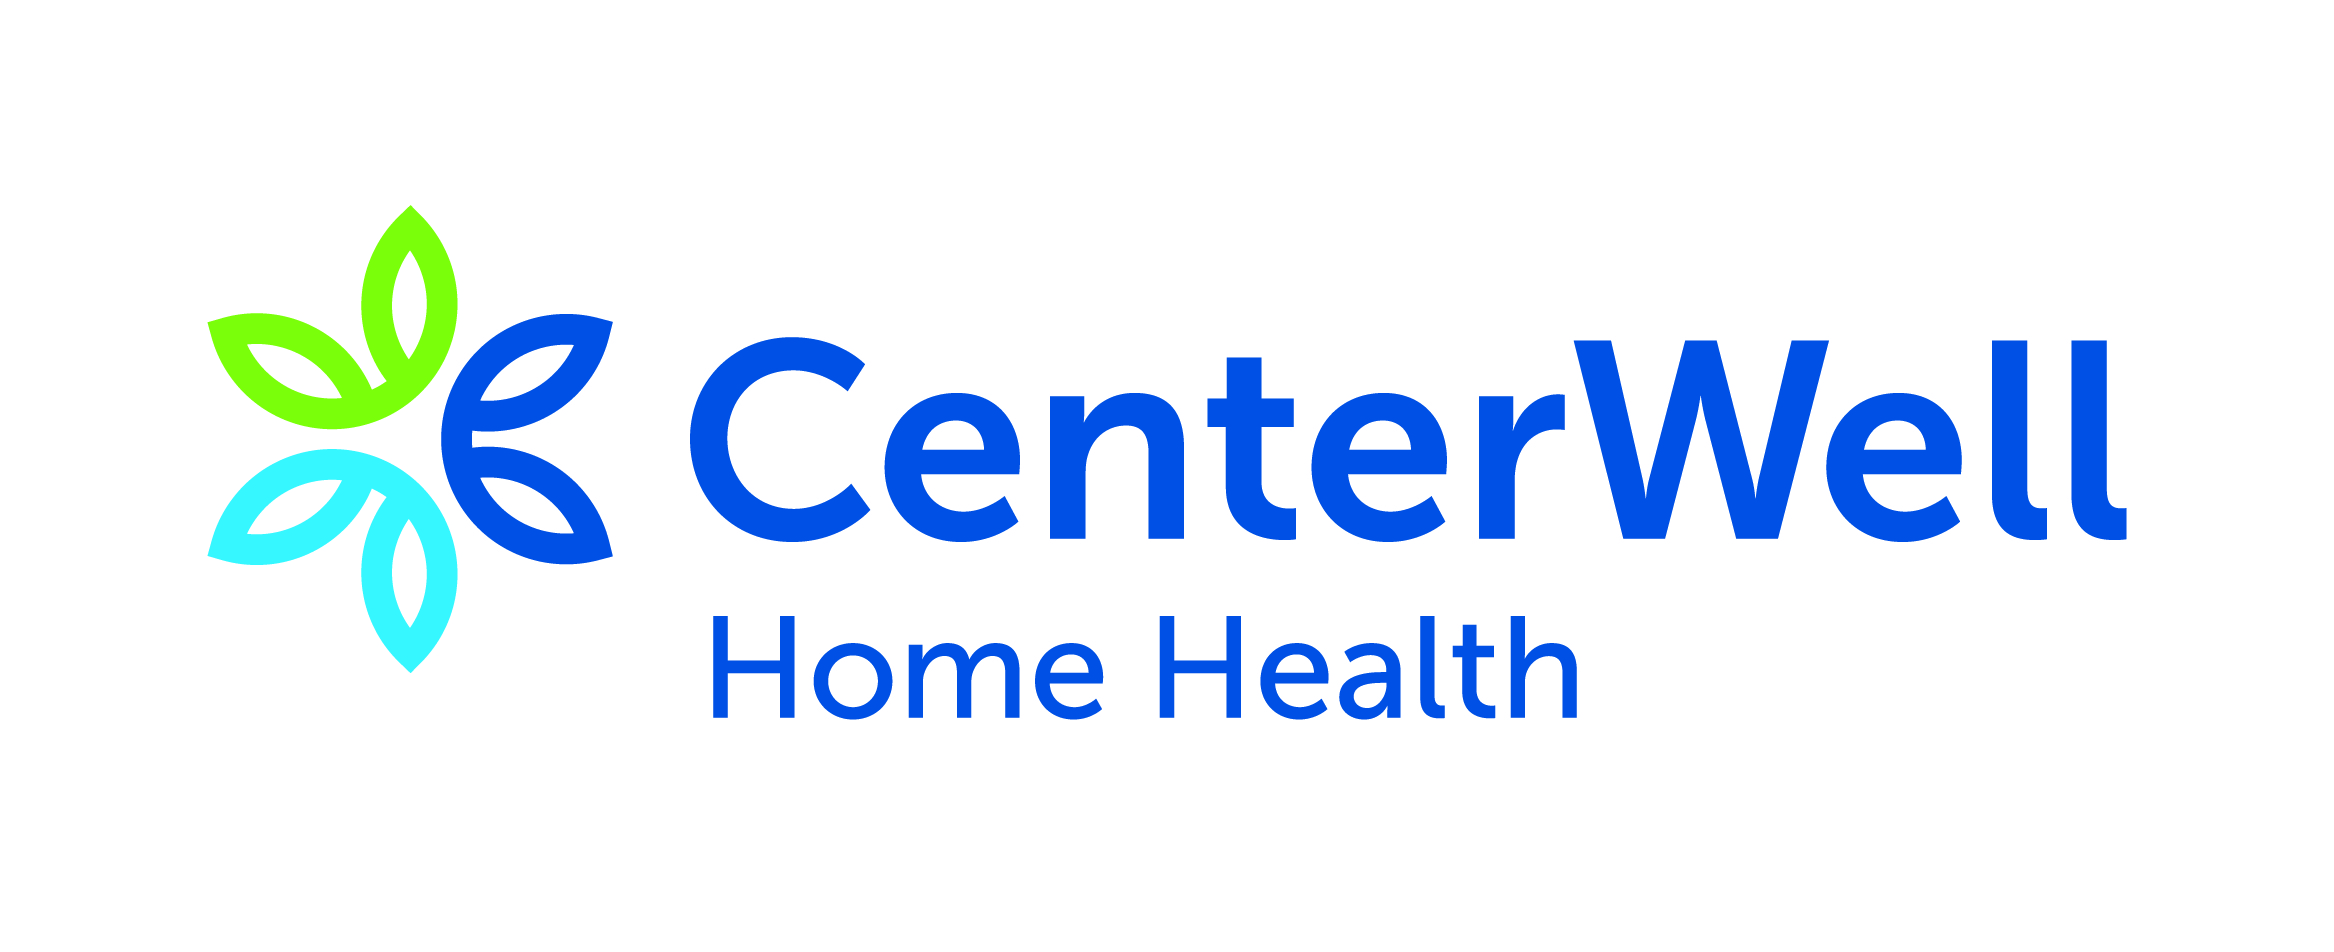  A2 CenterWell Home Health (Finish Line)